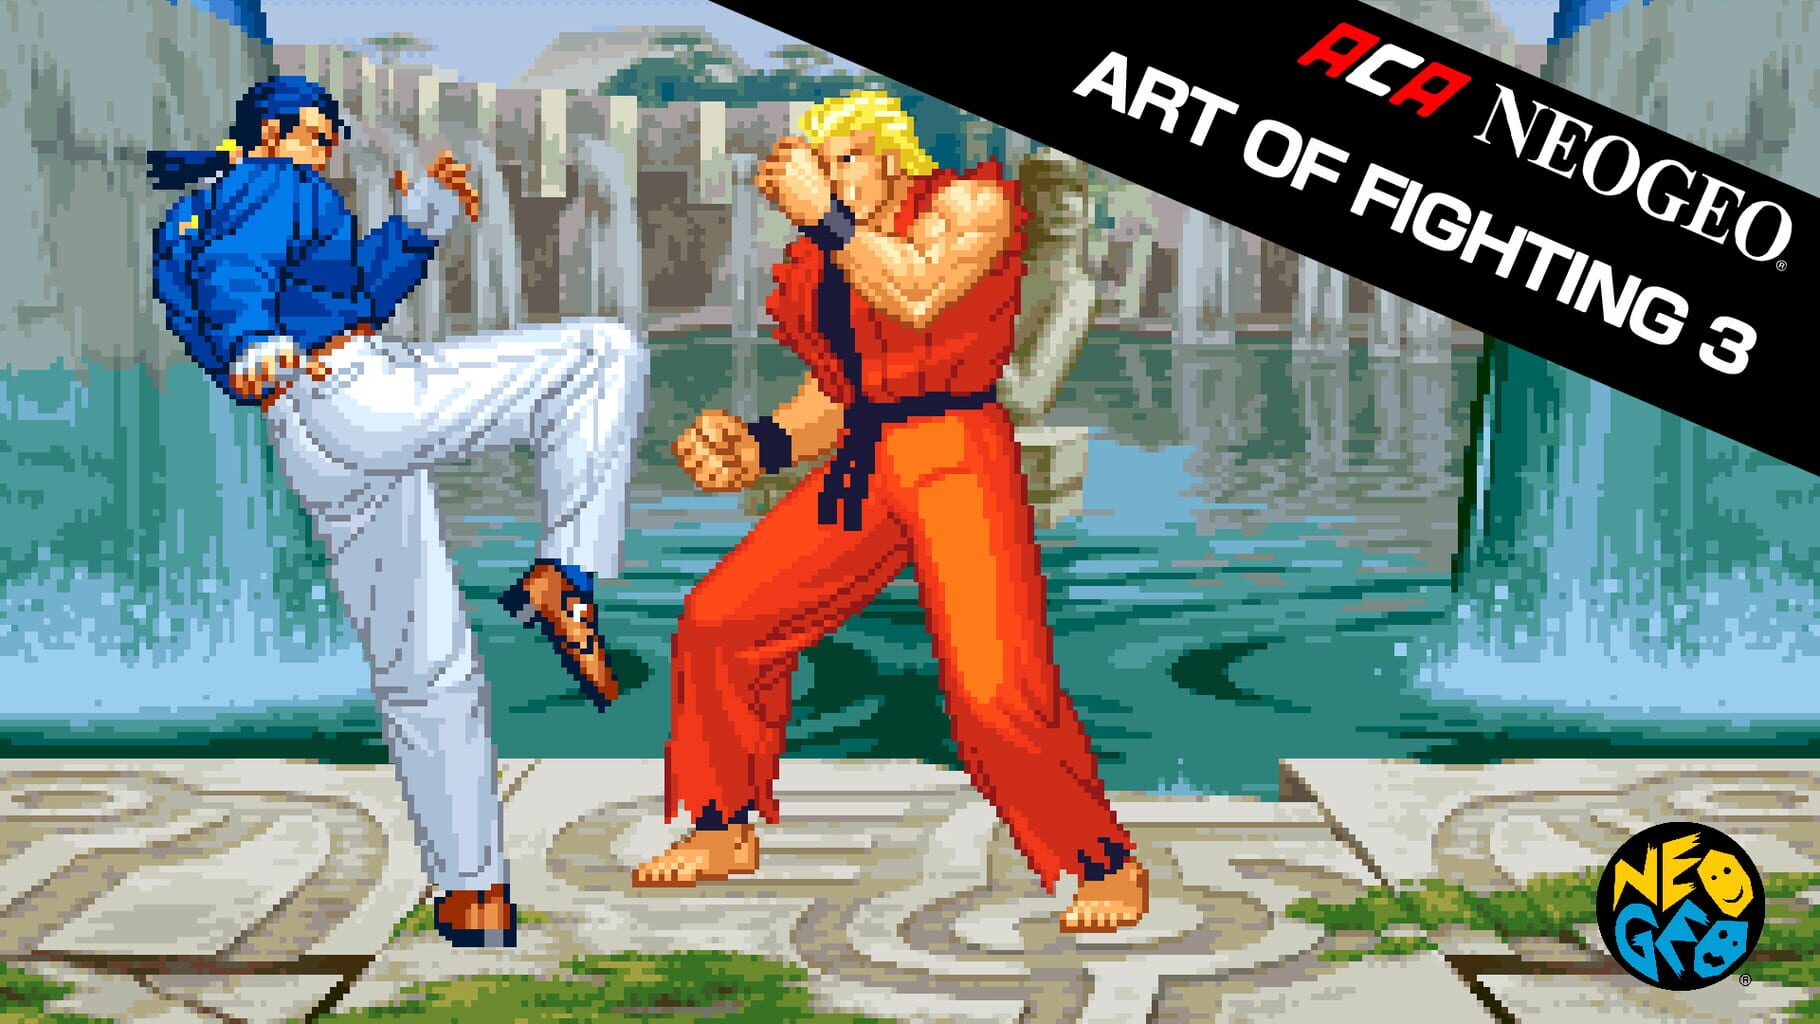 ACA Neo Geo: Art of Fighting 3 artwork